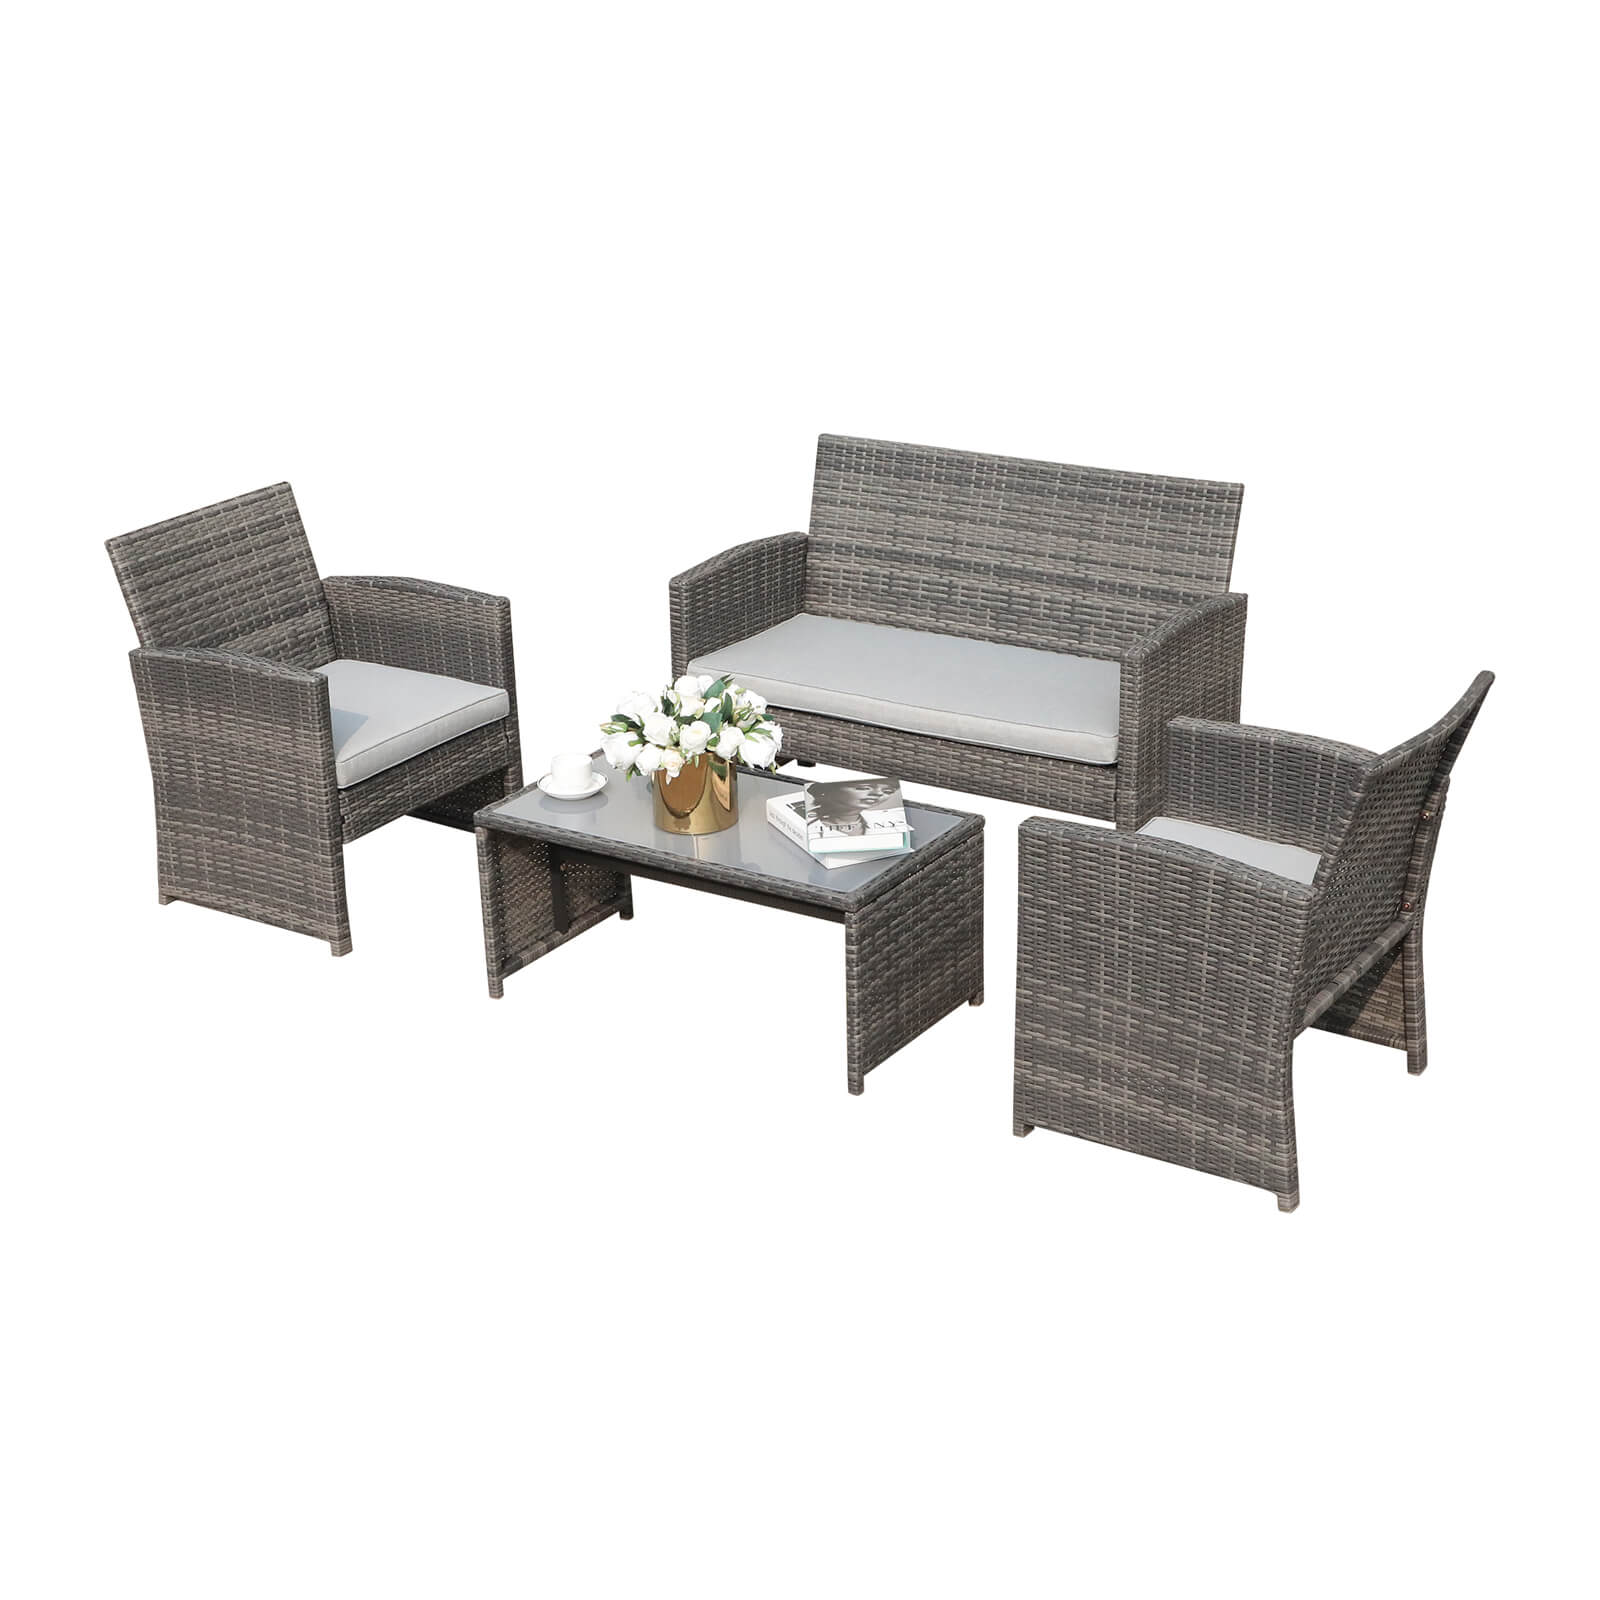 Outdoor Wicker Furniture - Resin Wicker Patio Sets 